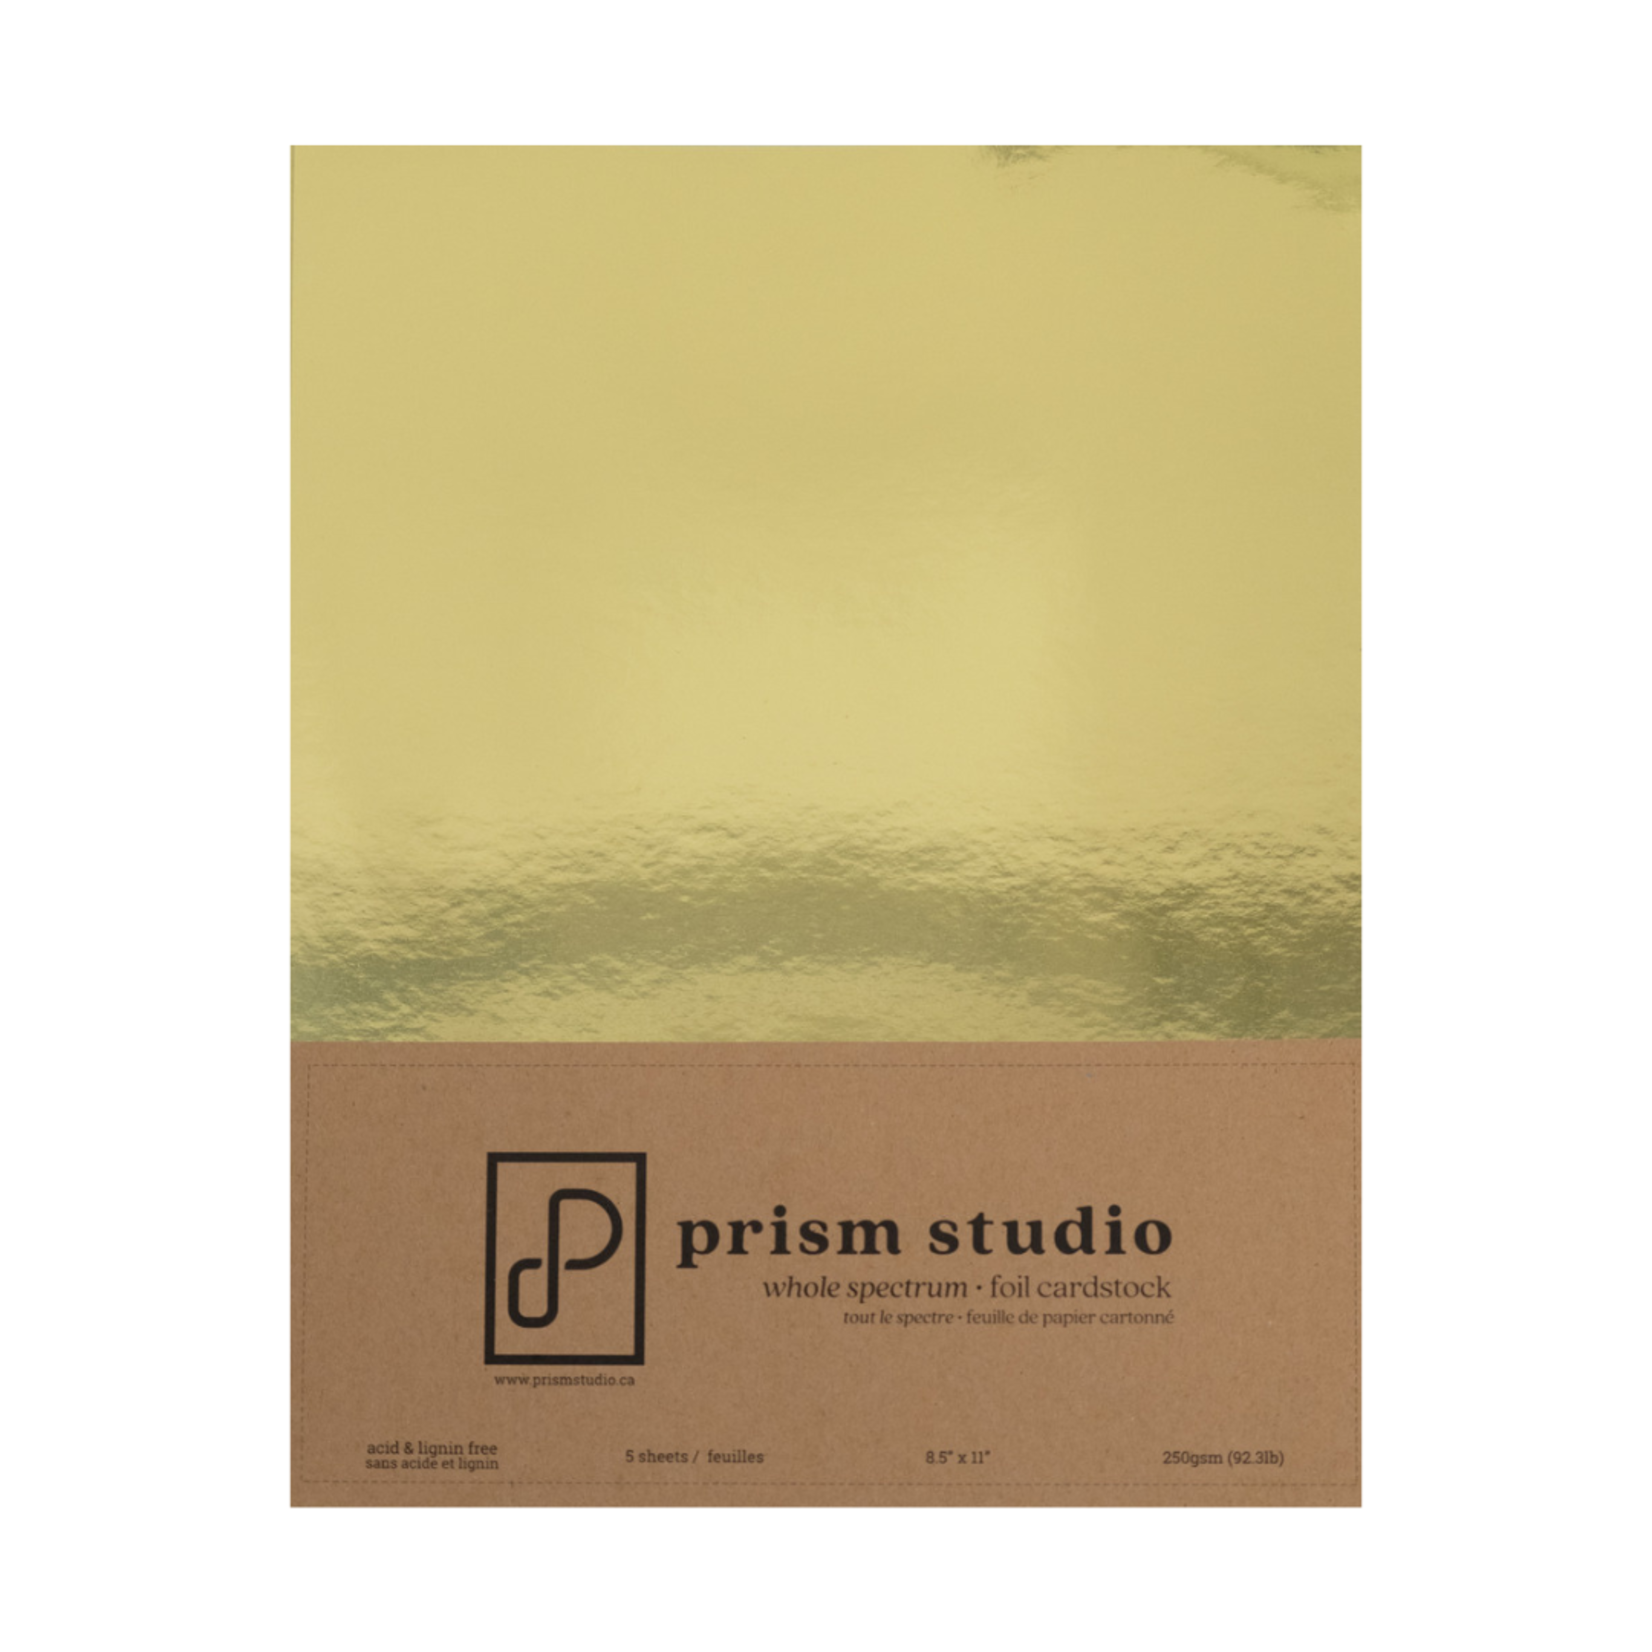 PRISM STUDIO PRISM STUDIO WHOLE SPECTRUM FOIL CARDSTOCK 8.5X11 WEDDING BAND